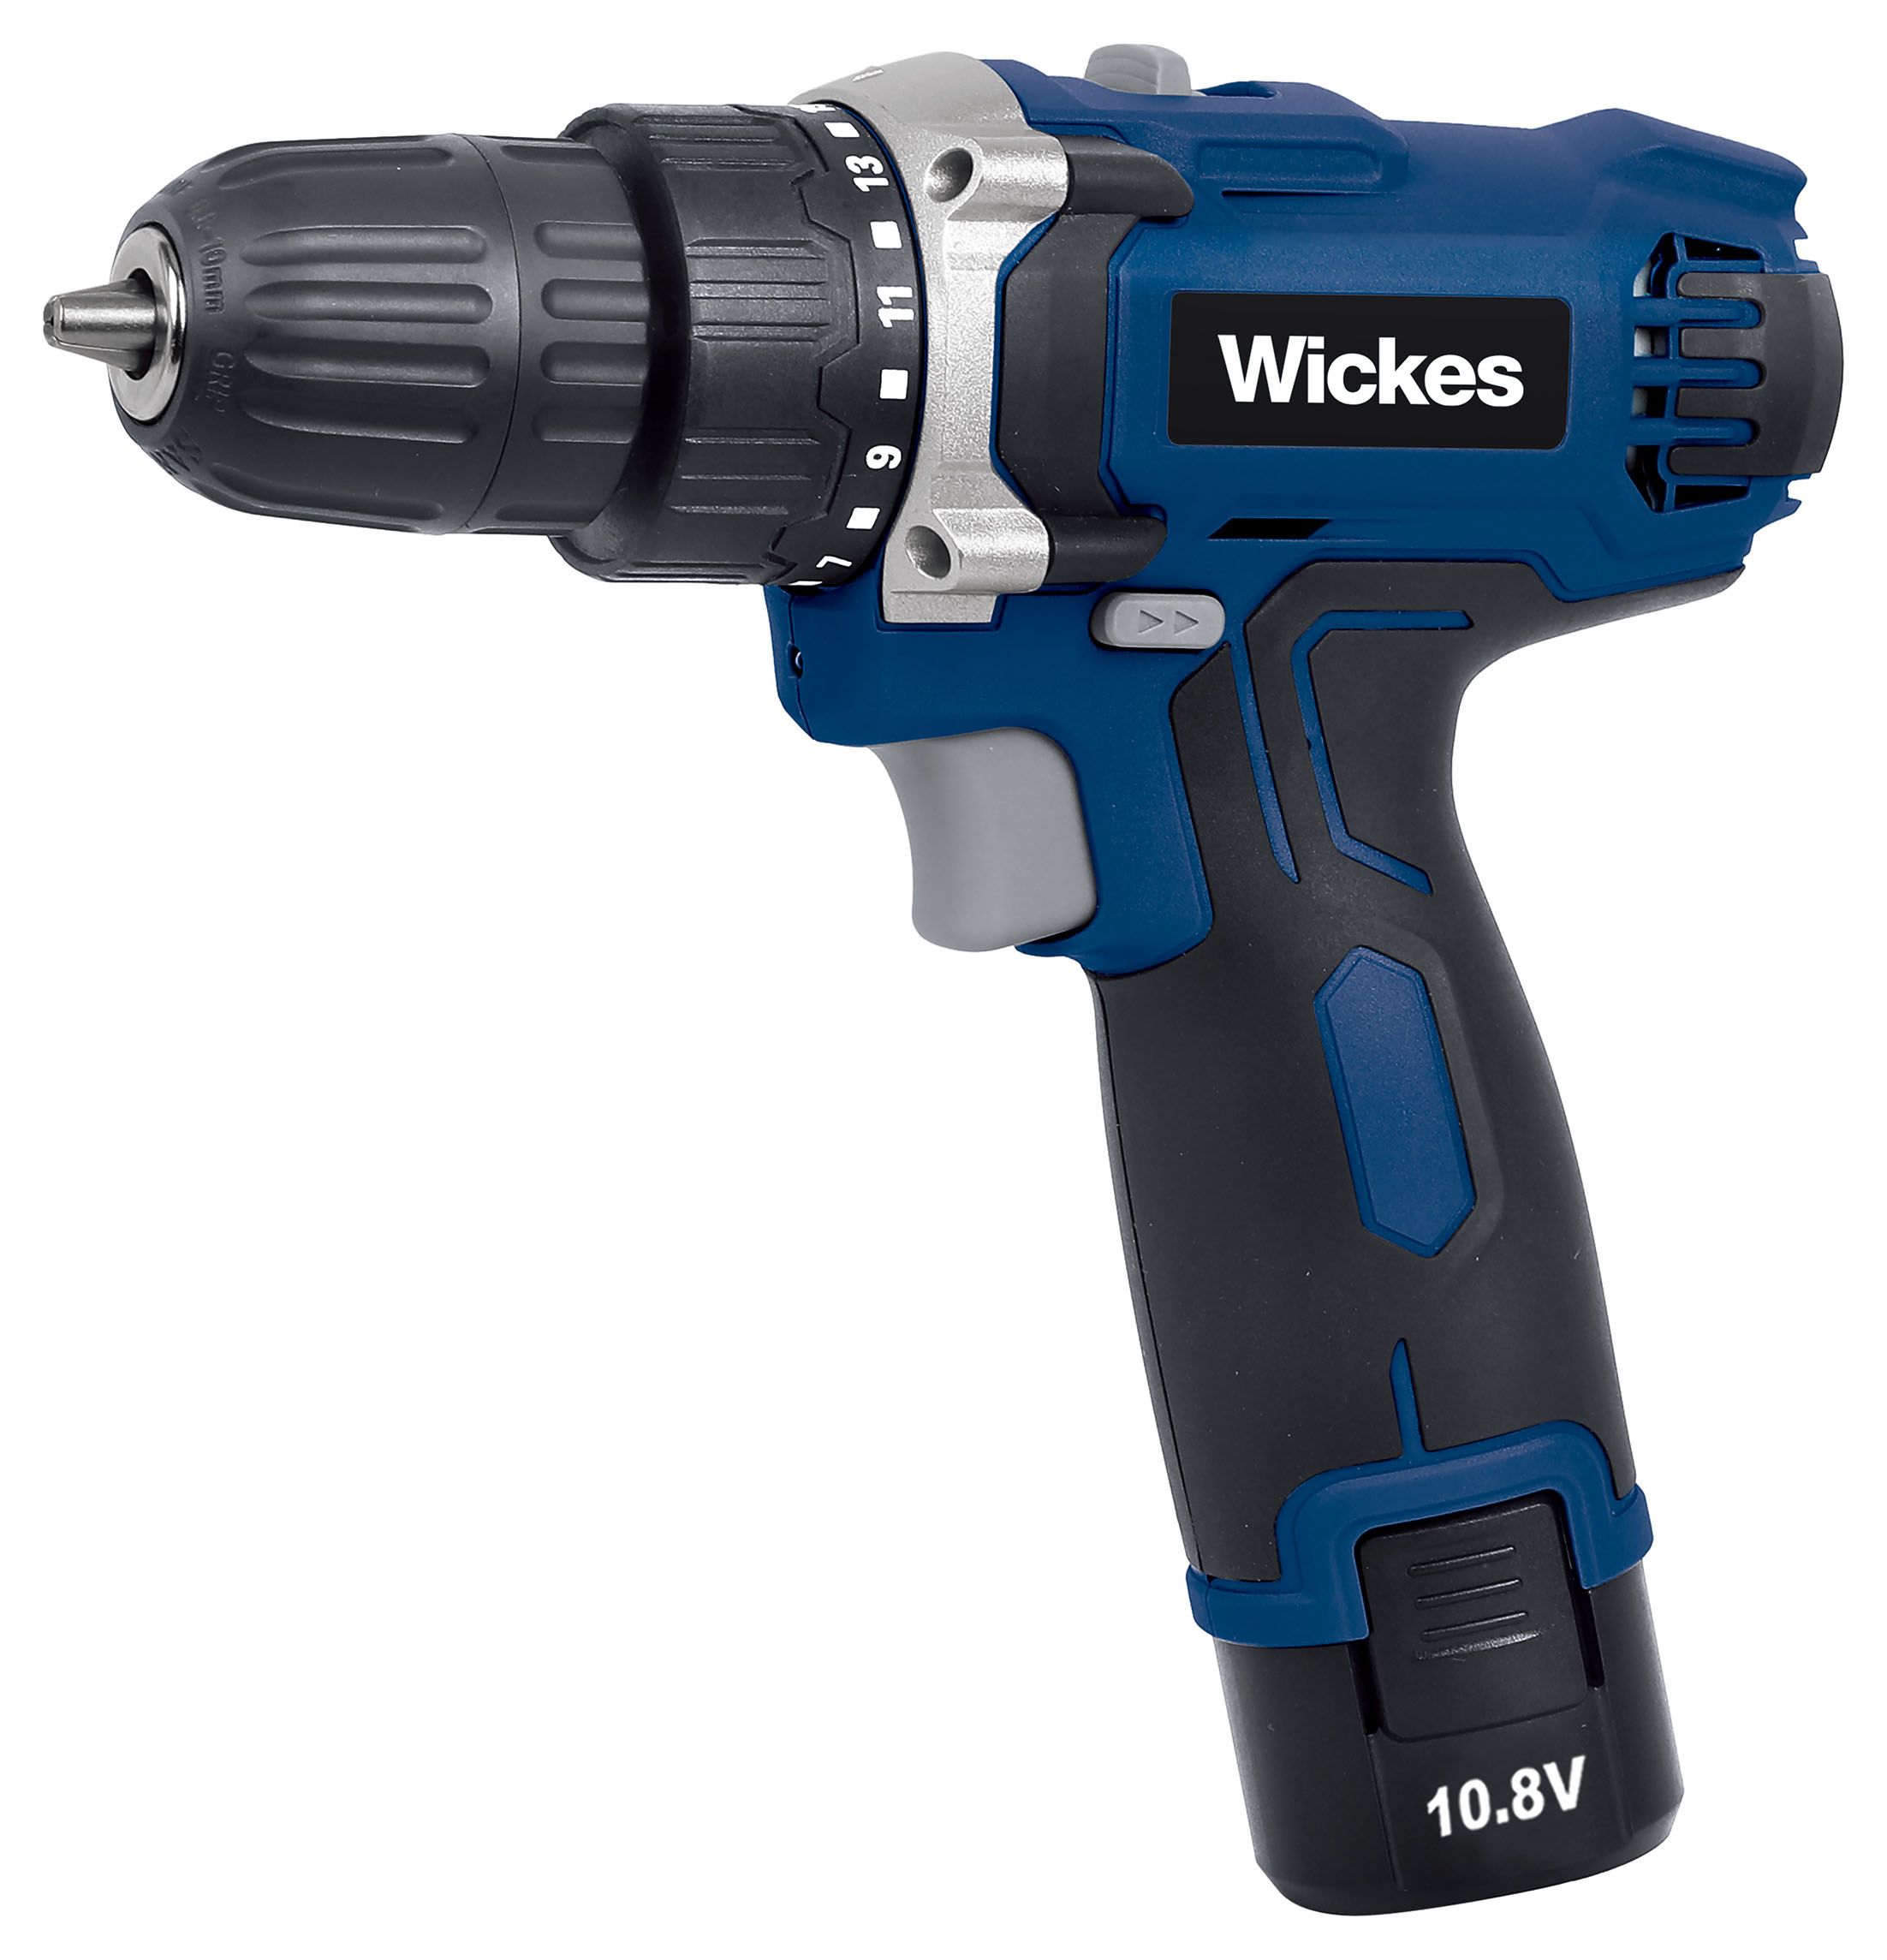 Wickes 10.8V 1 x 1.5Ah Li-ion Cordless Drill Driver